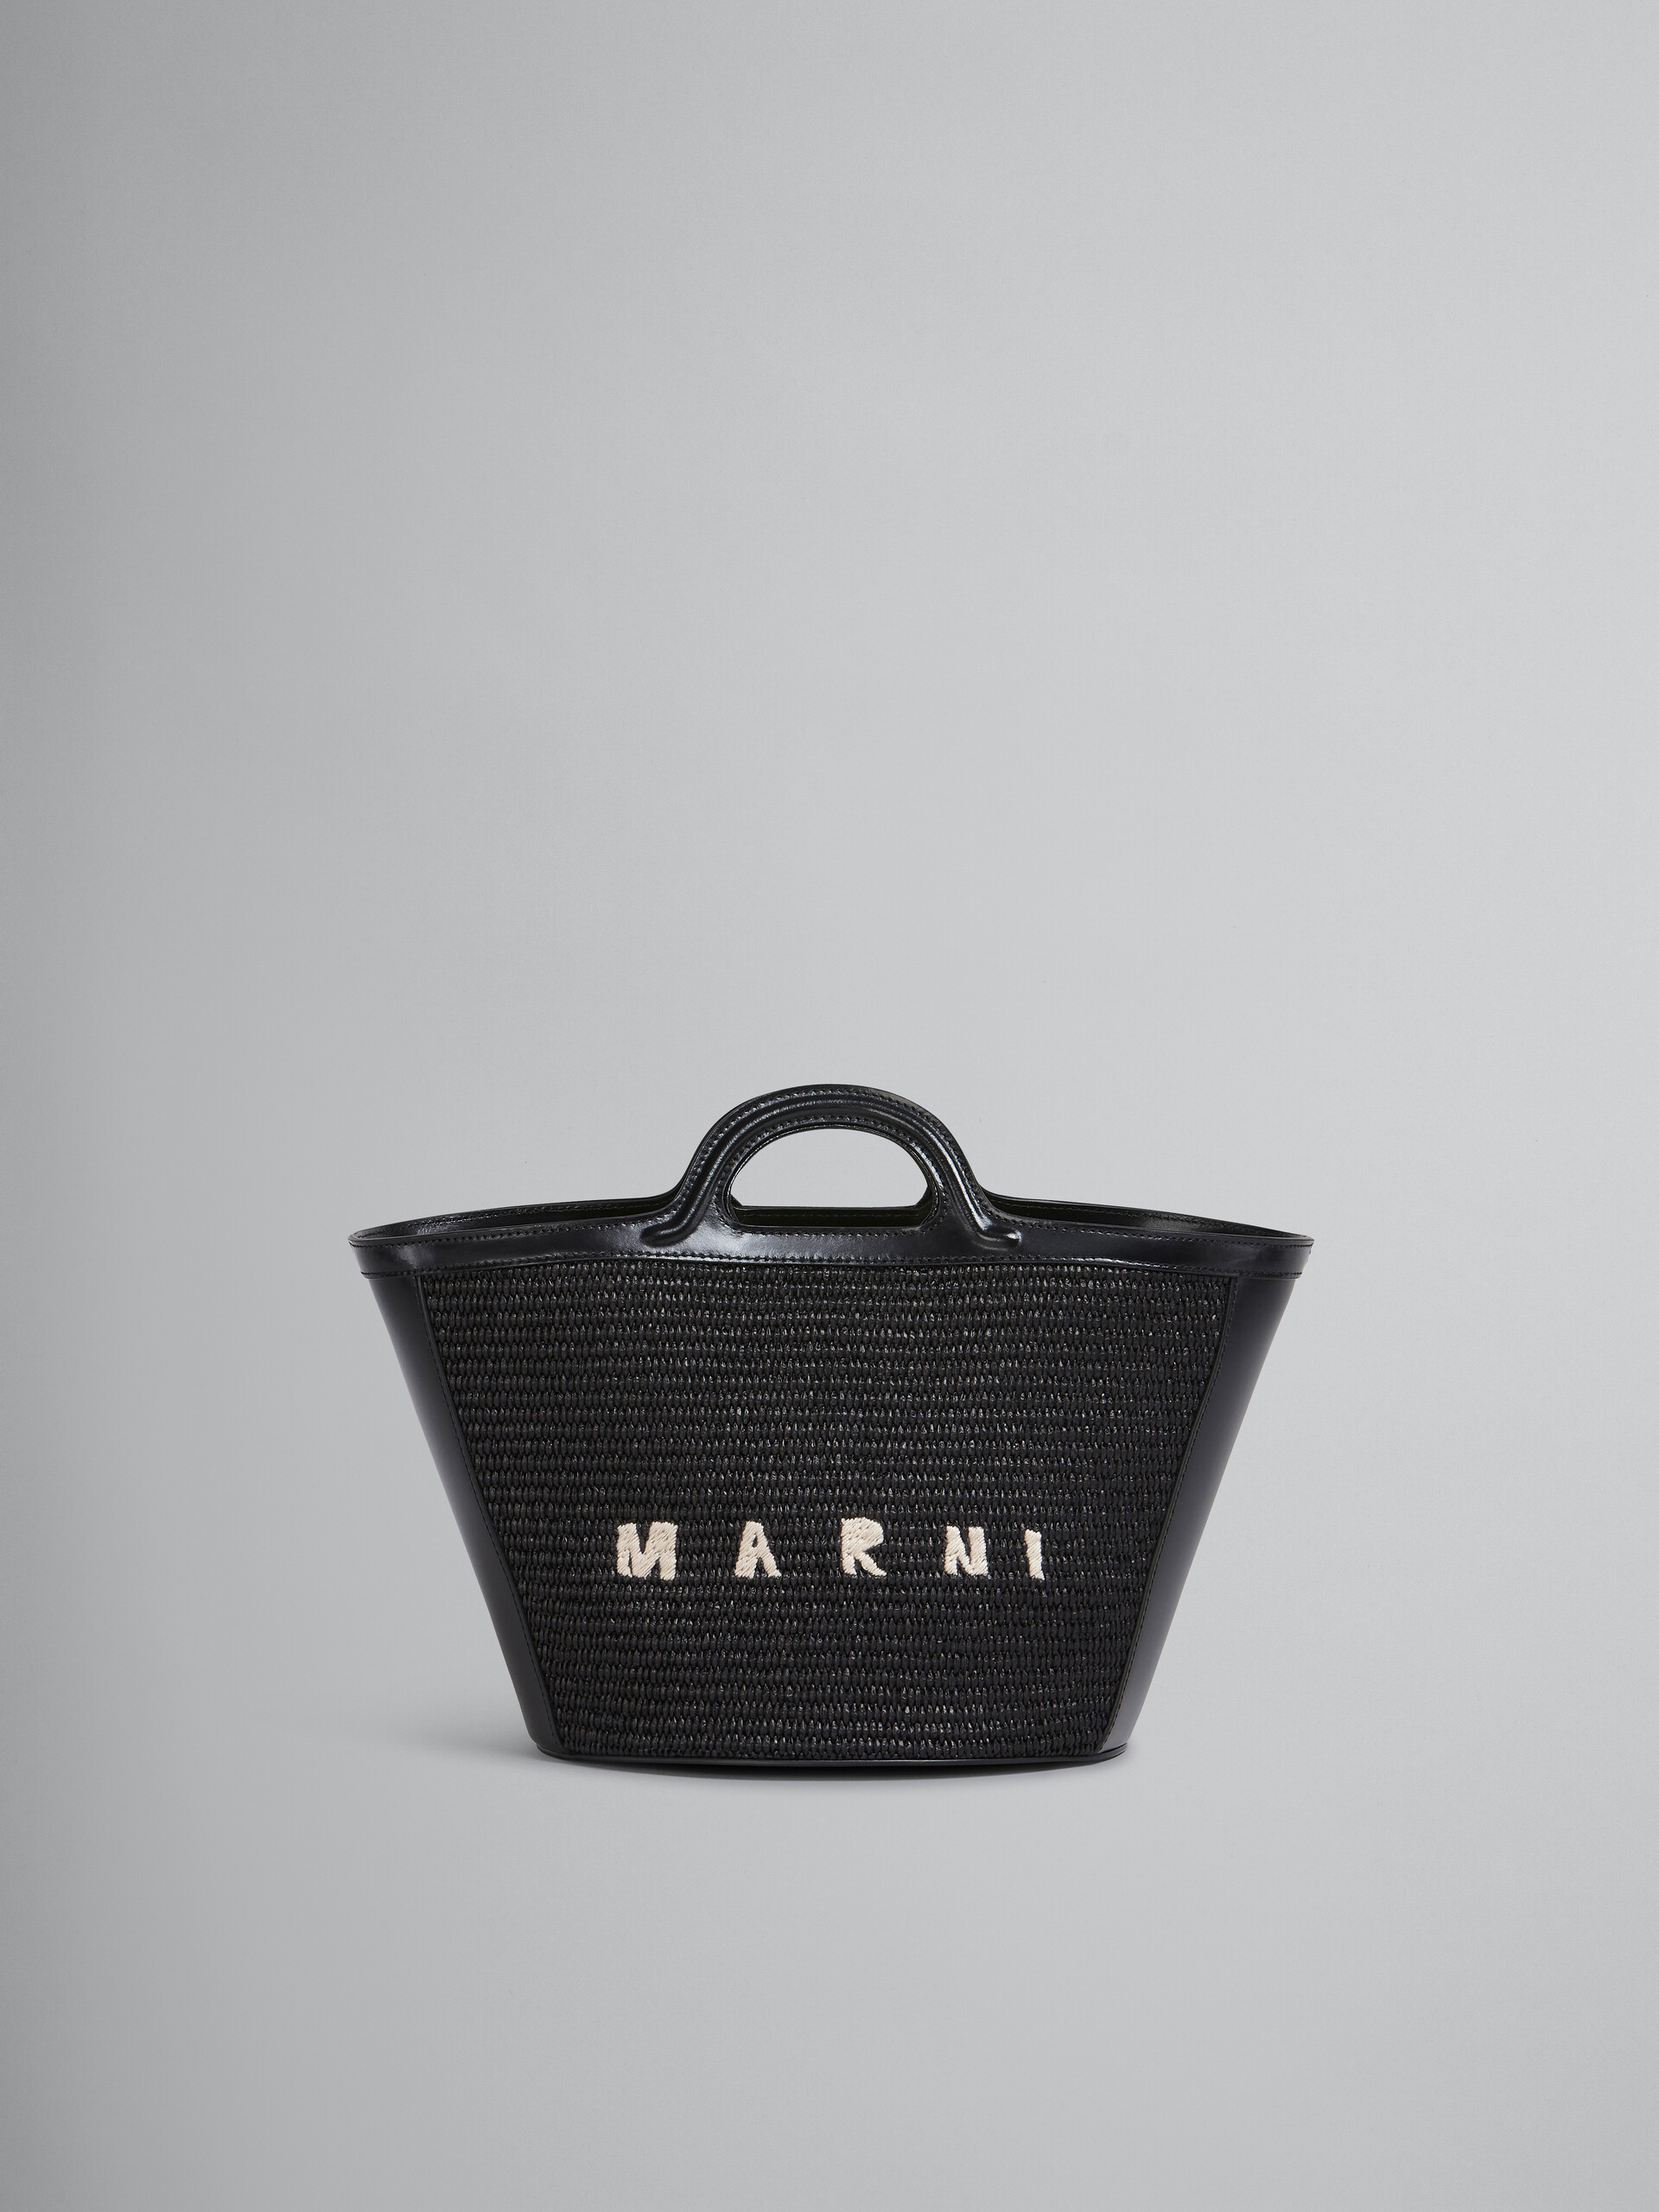 TROPICALIA small bag in black leather and raffia - Handbag - Image 1